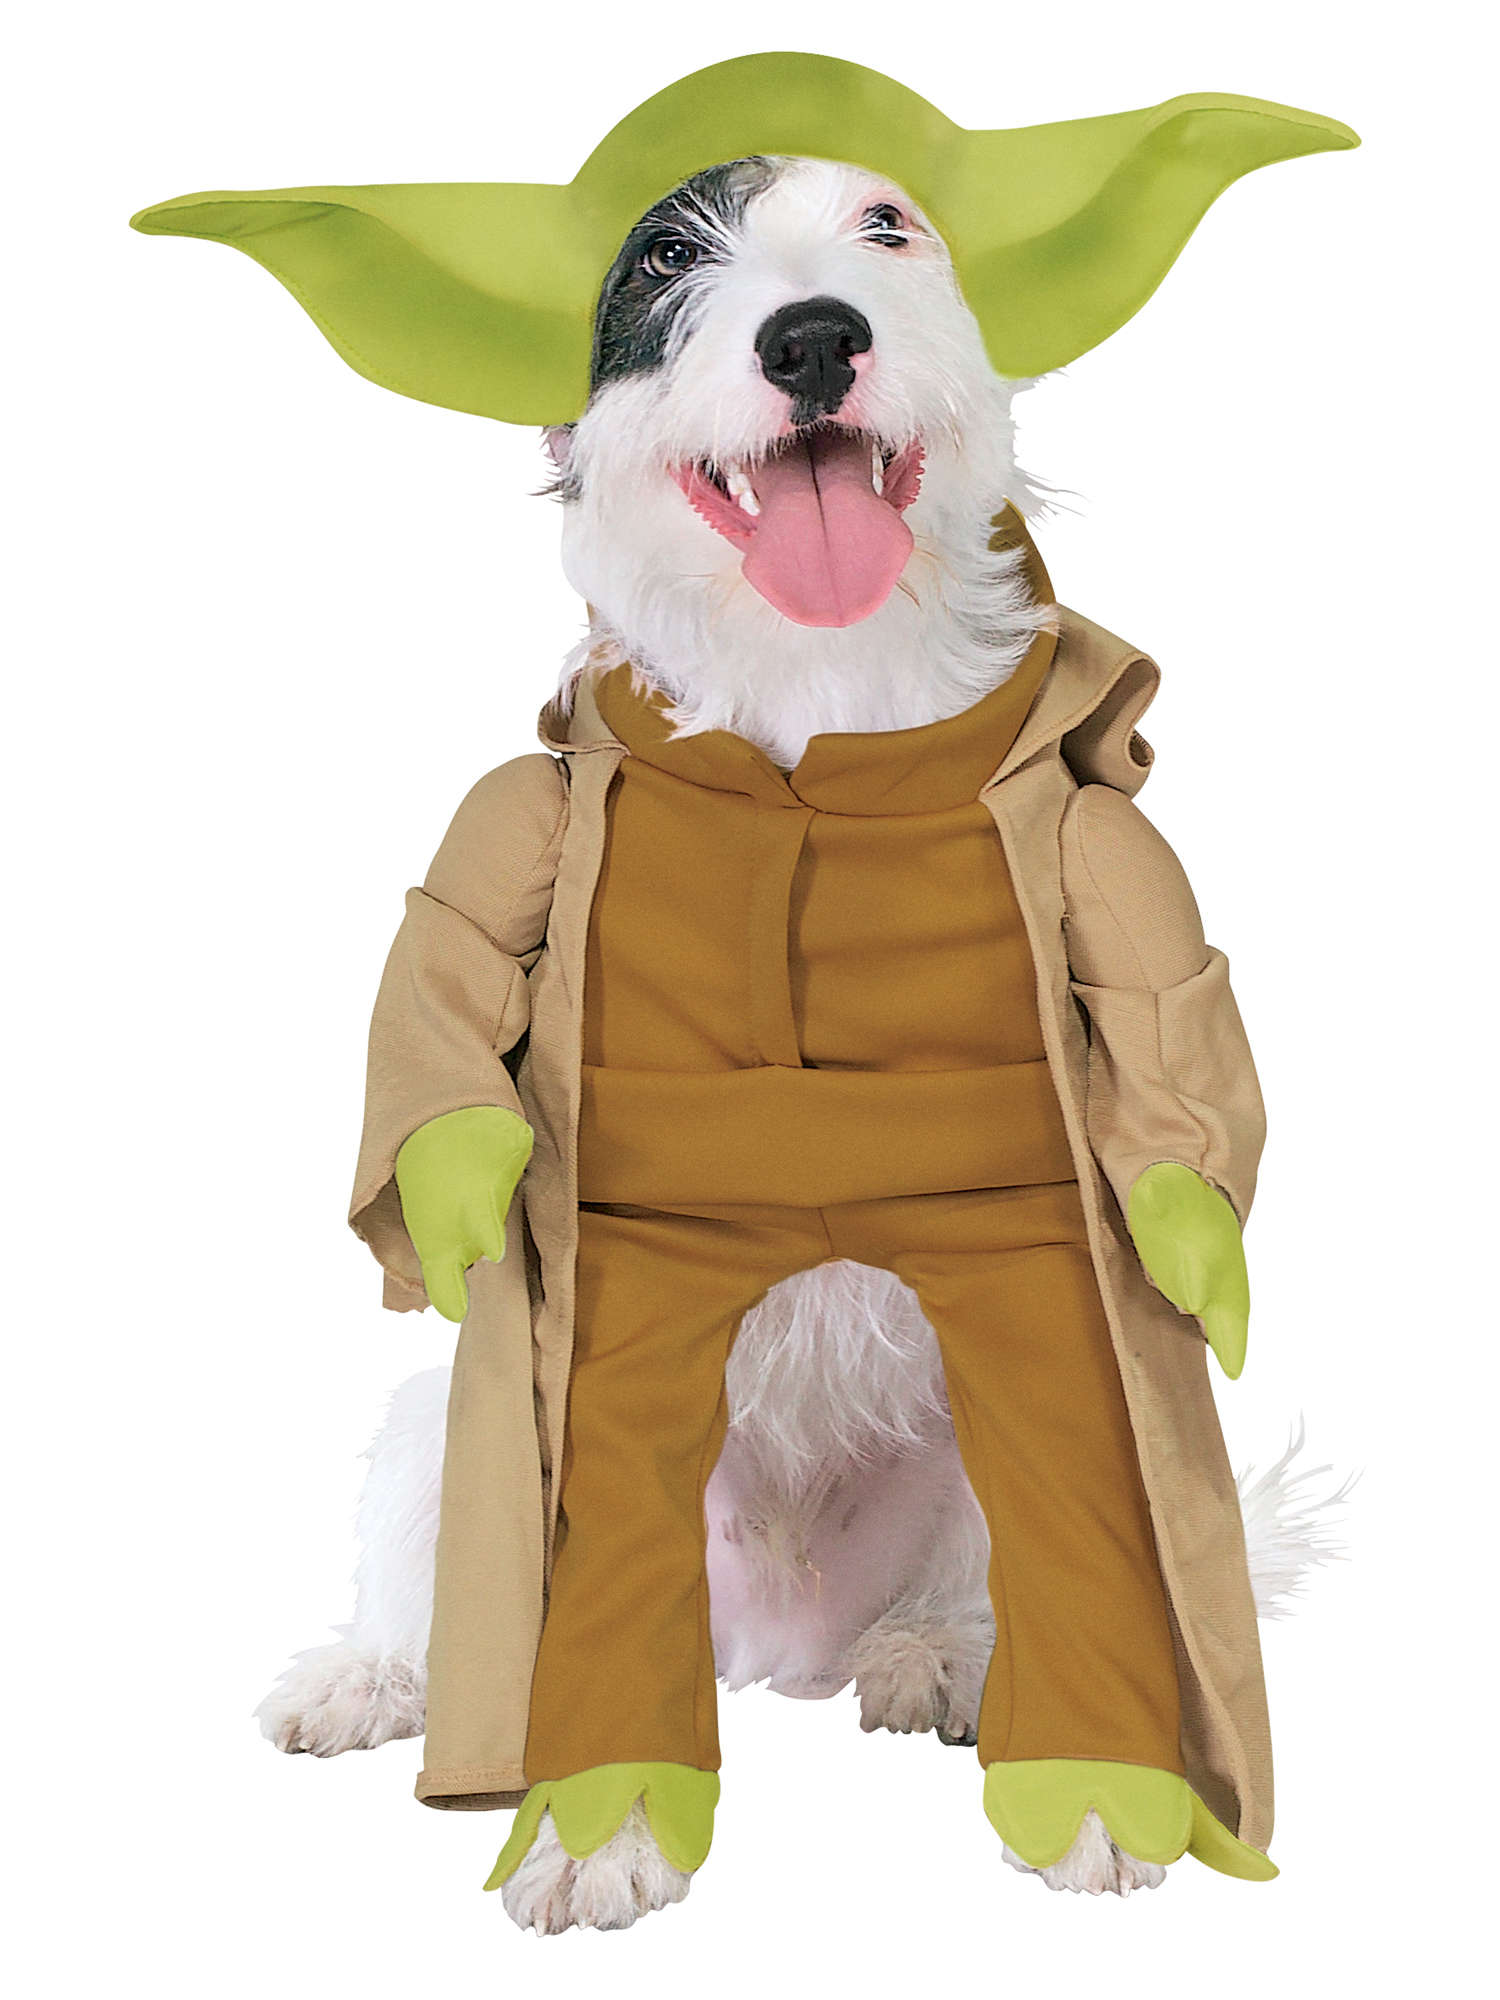 Yoda, Empire Strikes Back, Episode V, Empire Strikes Back, Multi, Star Wars, Pet Costume, Small, Front